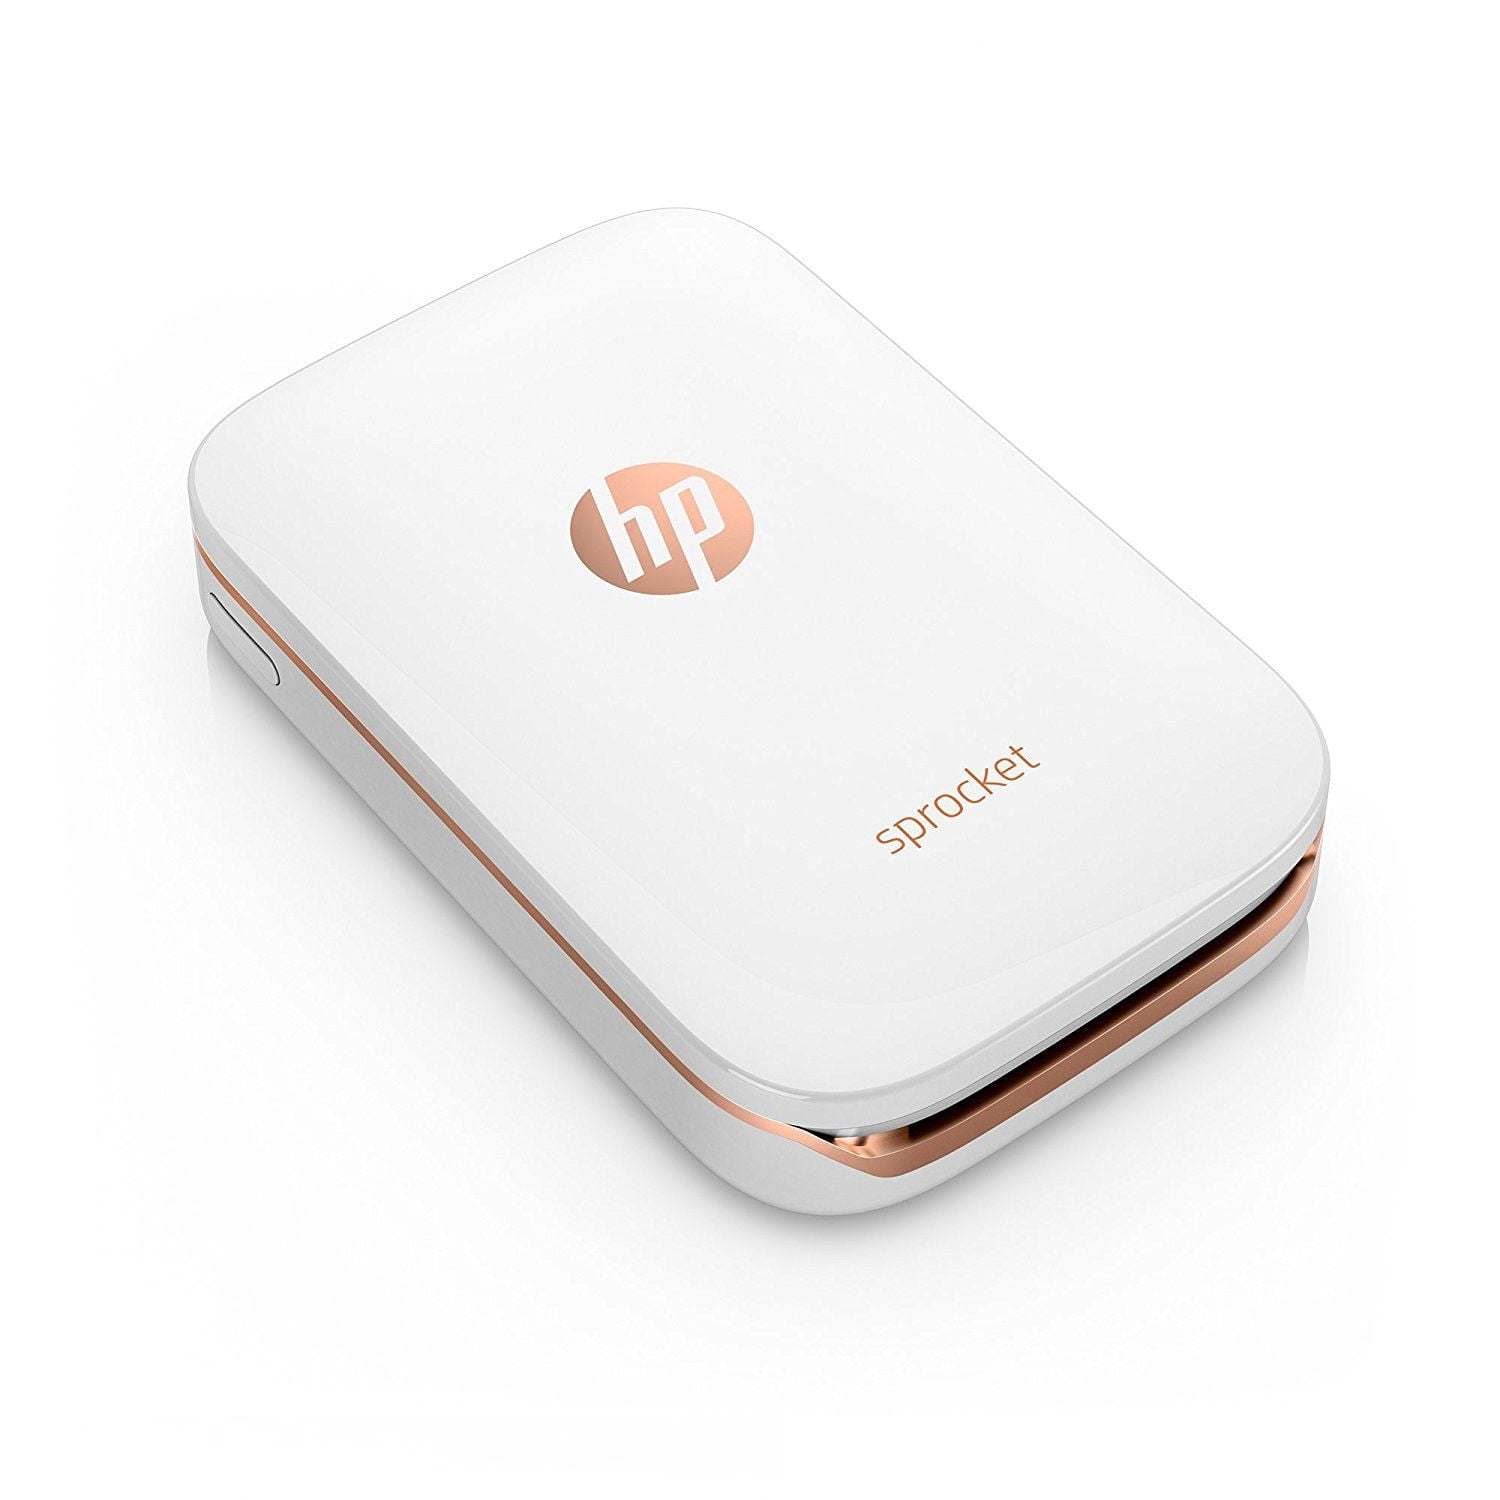 HP Sprocket Portable Photo Printer, print Social Media Photos on